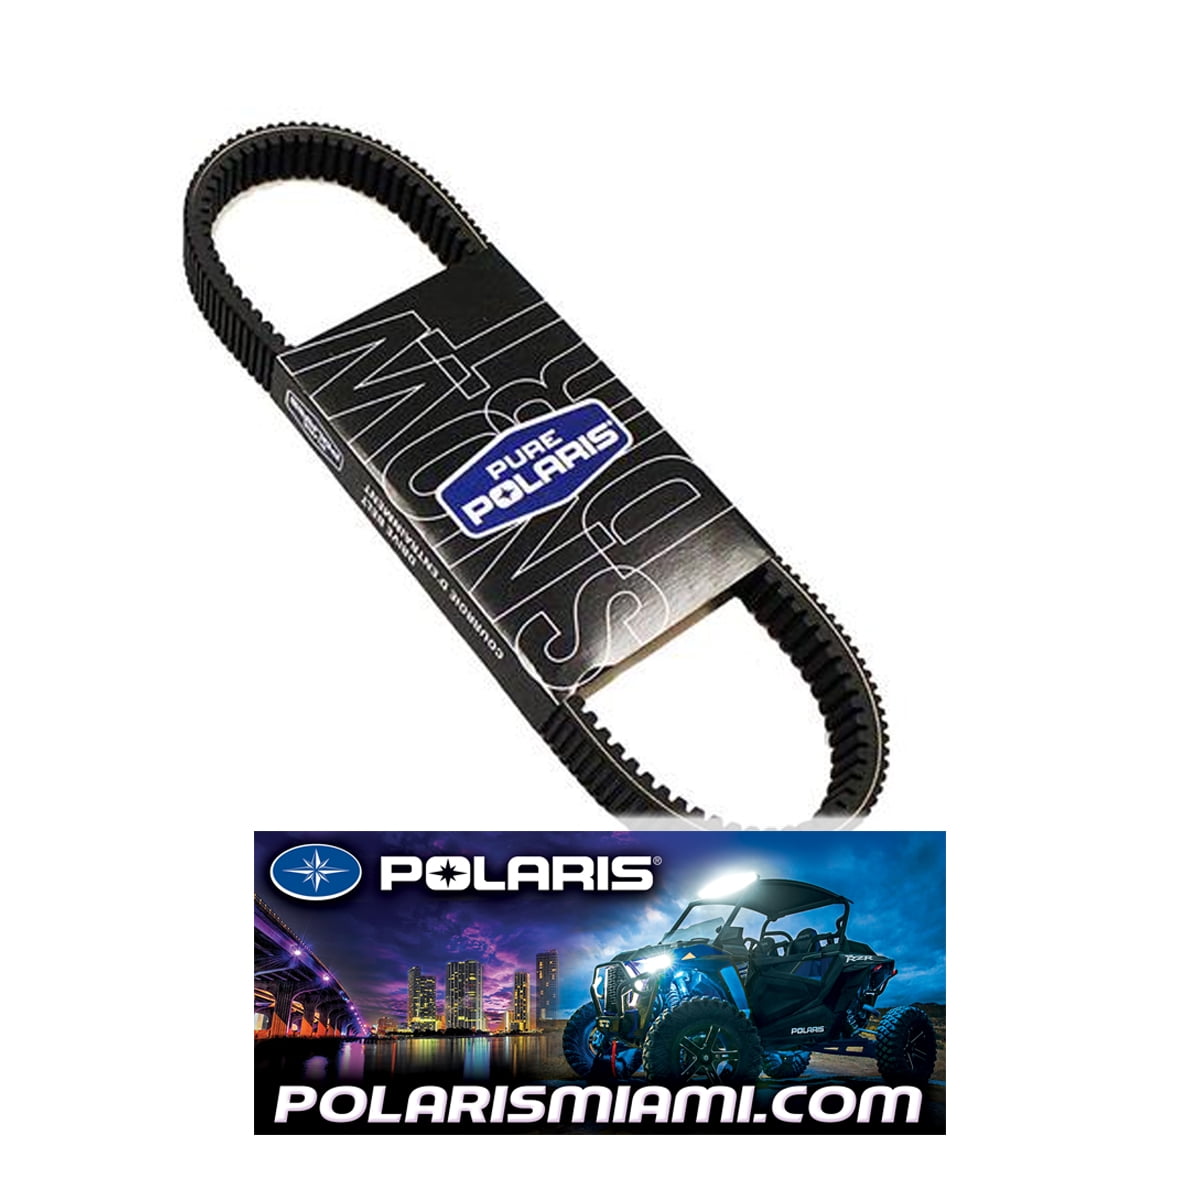 2007 for Polaris Sportsman 700 EFI Drive Belt Dayco HPX ATV OEM Upgrade Replacement Transmission Belts 